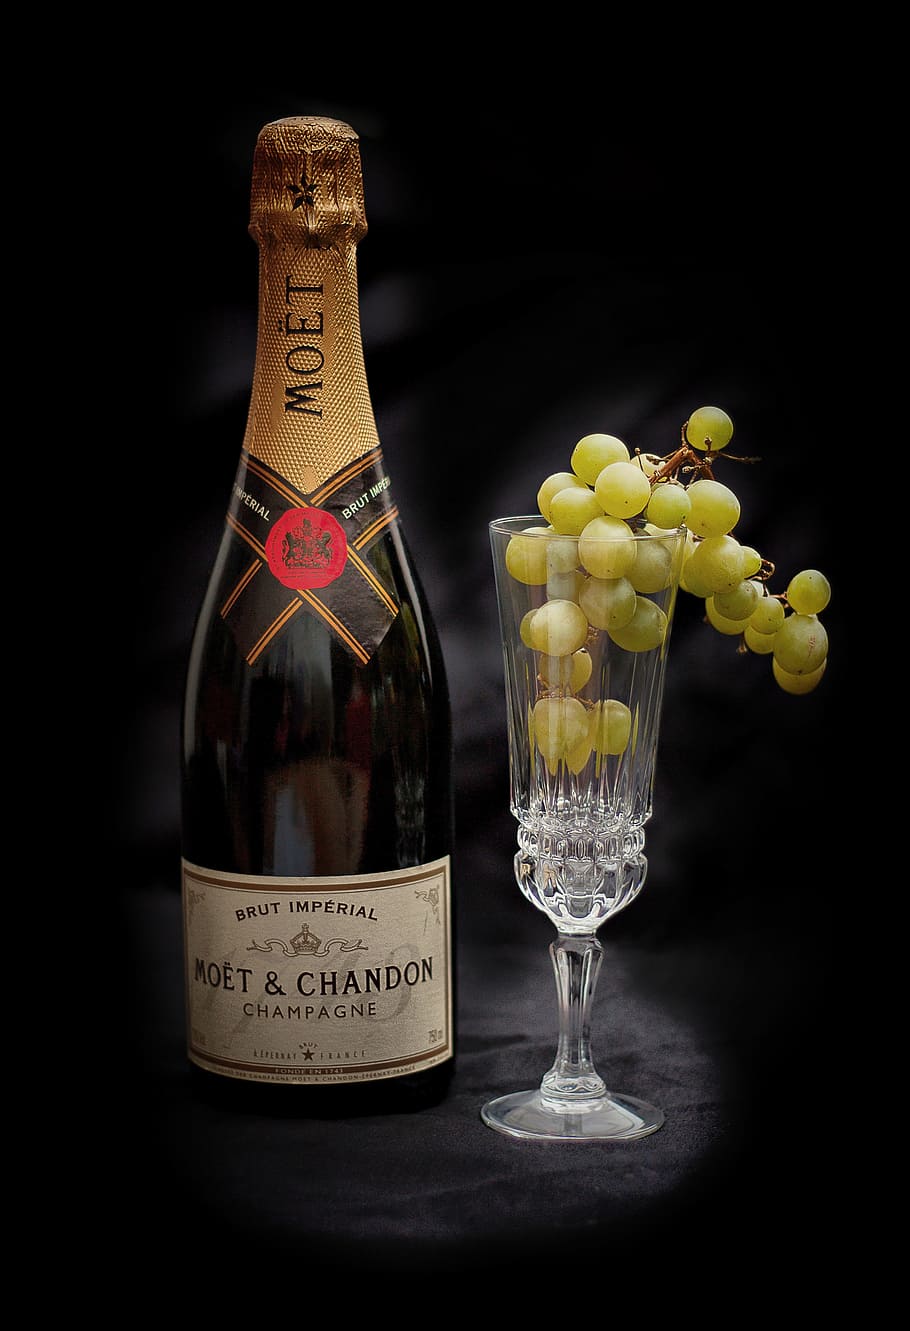 noet, &, chandon champagne bottle, Champagne, Drink, Sparkling Wine, Wine, Bottle, bottle, champagne bottles, champagne glasses